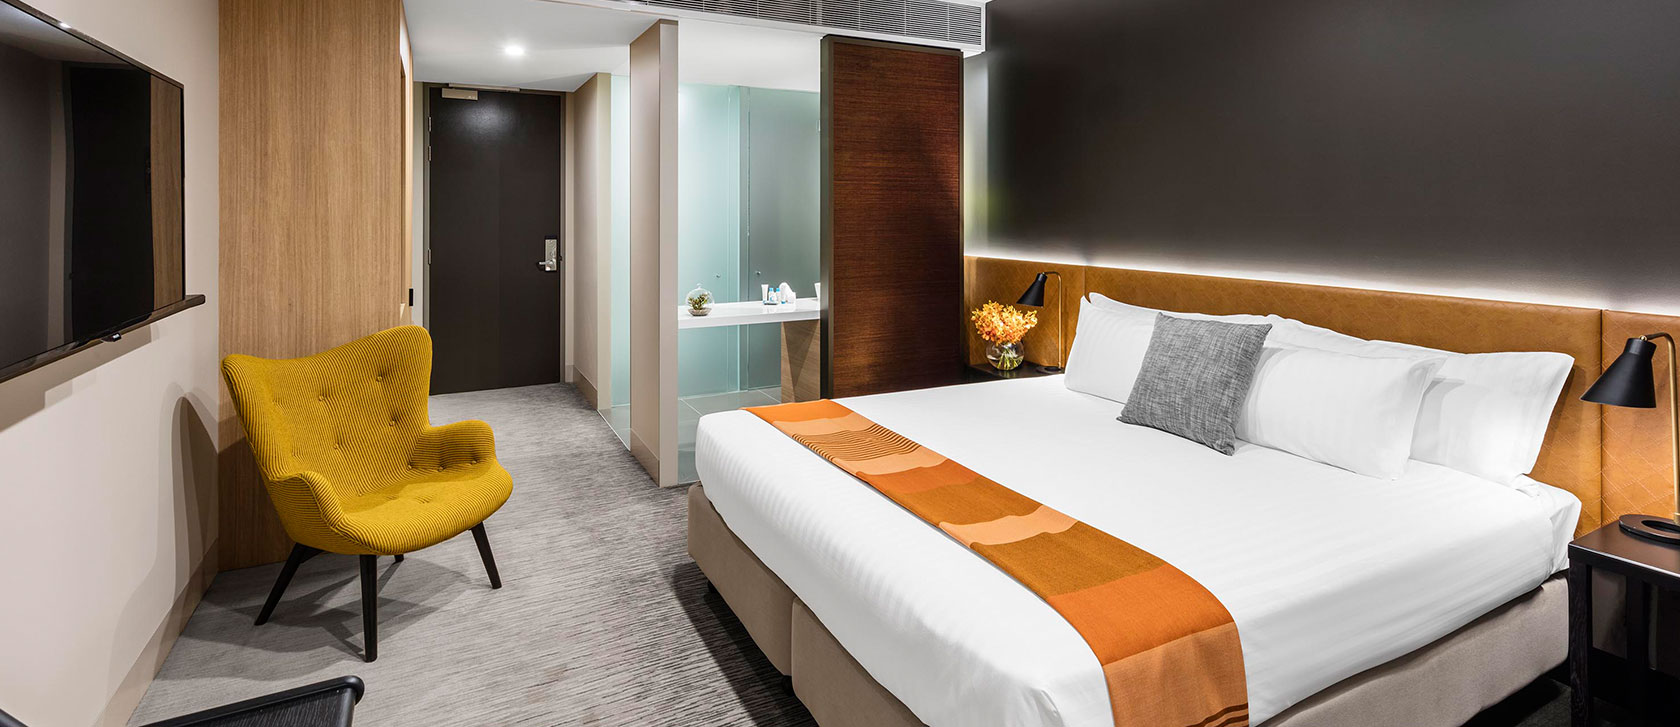 Vibe-Hotel-Canberra-Room.jpg